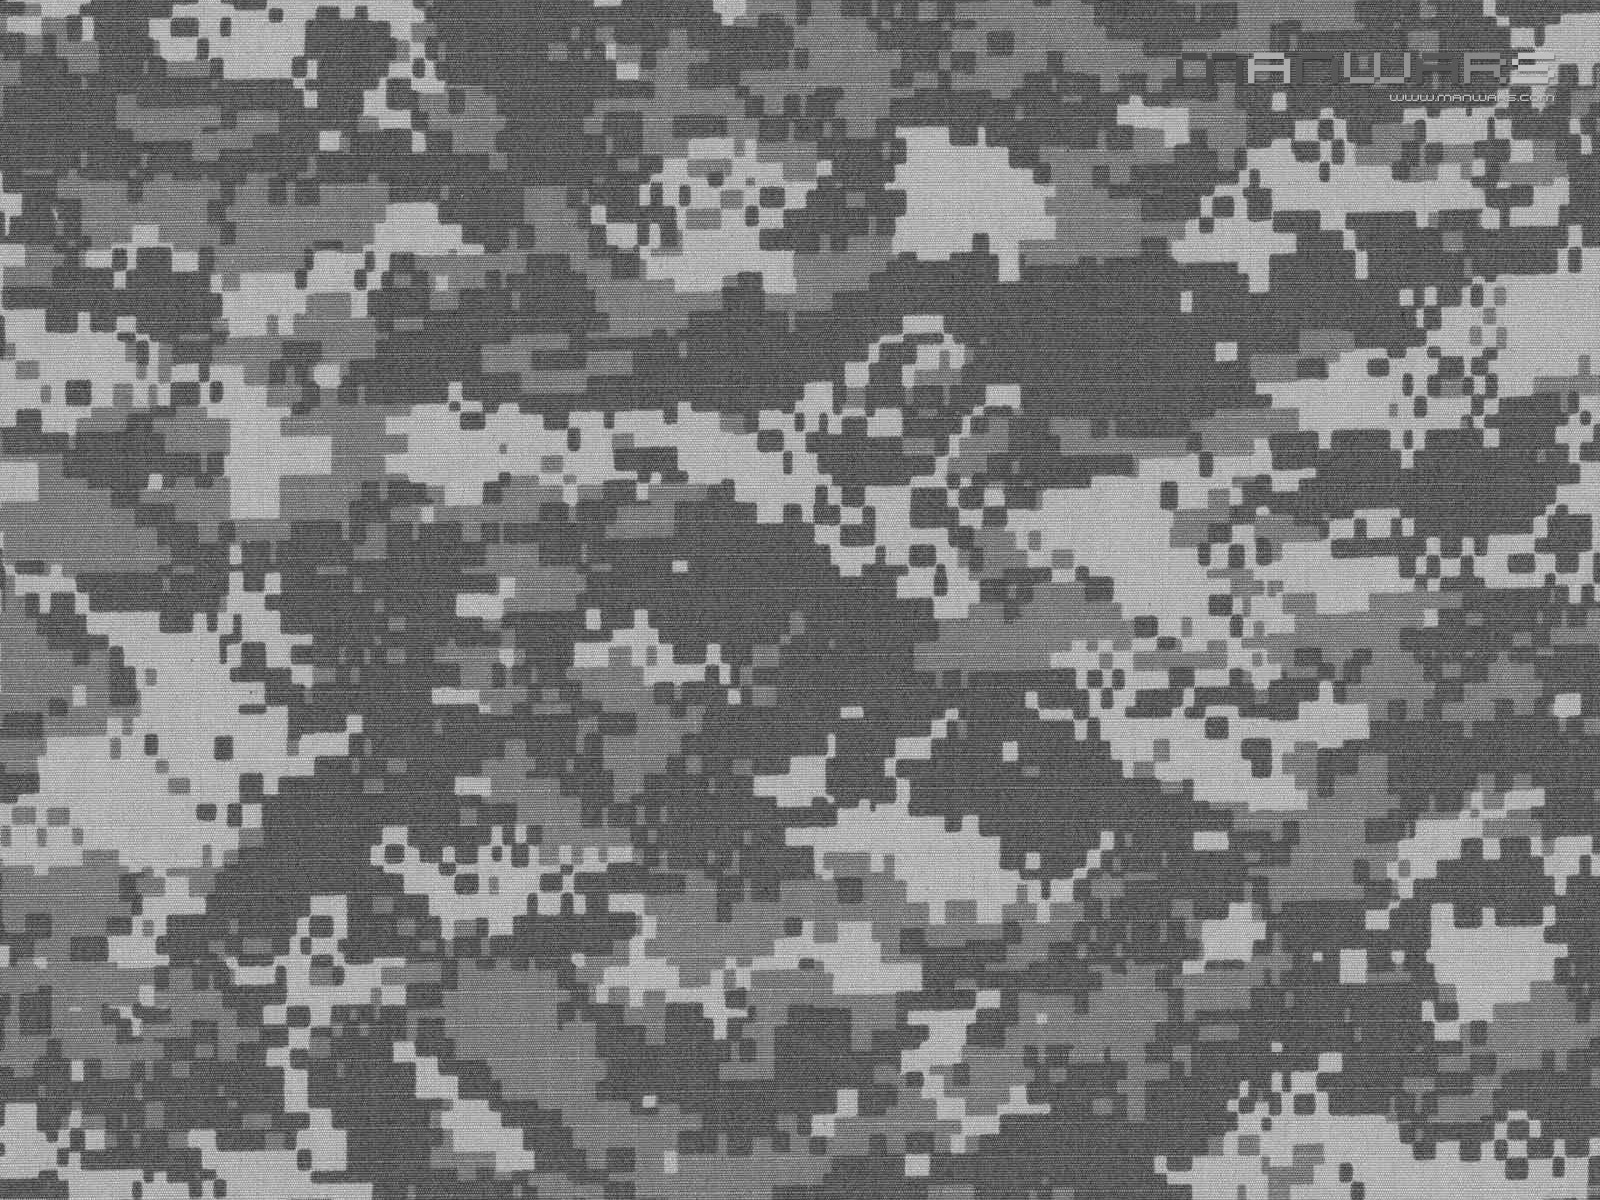 net camouflage wallpaper snake desktop 12106 html filesize 1920x1080 1600x1200